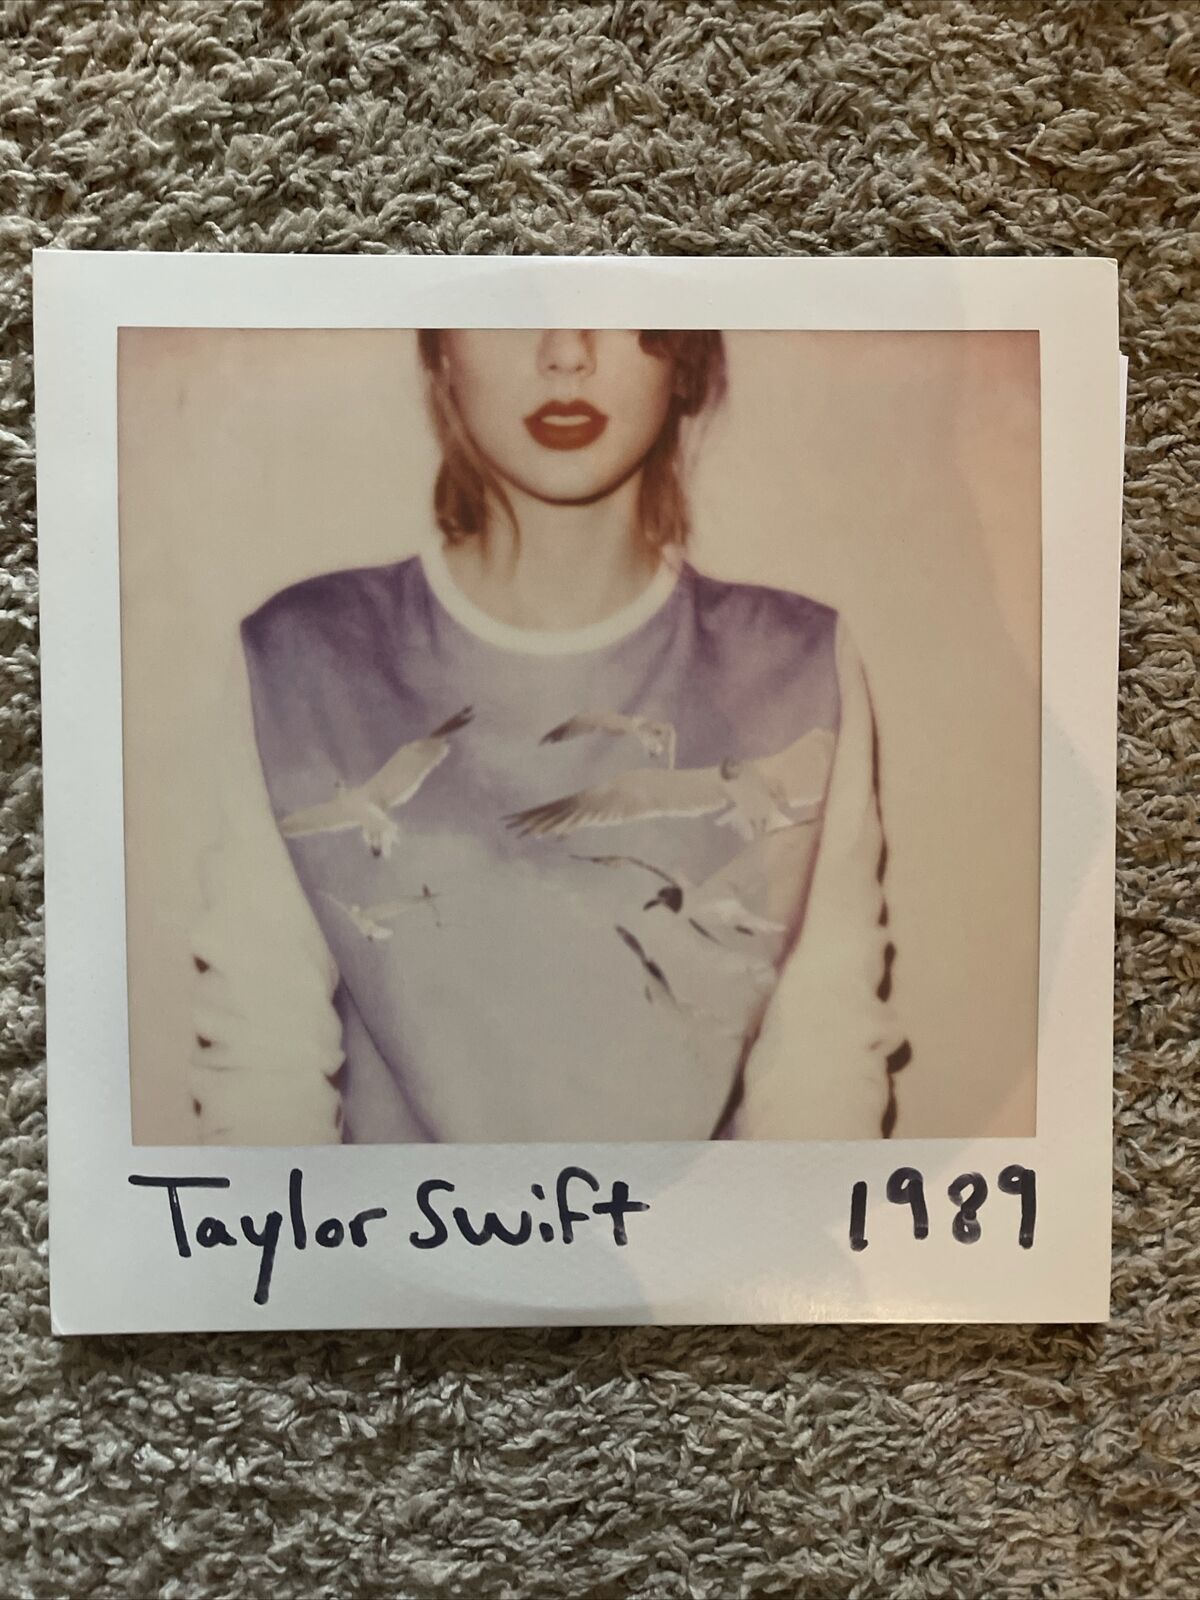 Taylor Swift's 1989 Vinyl